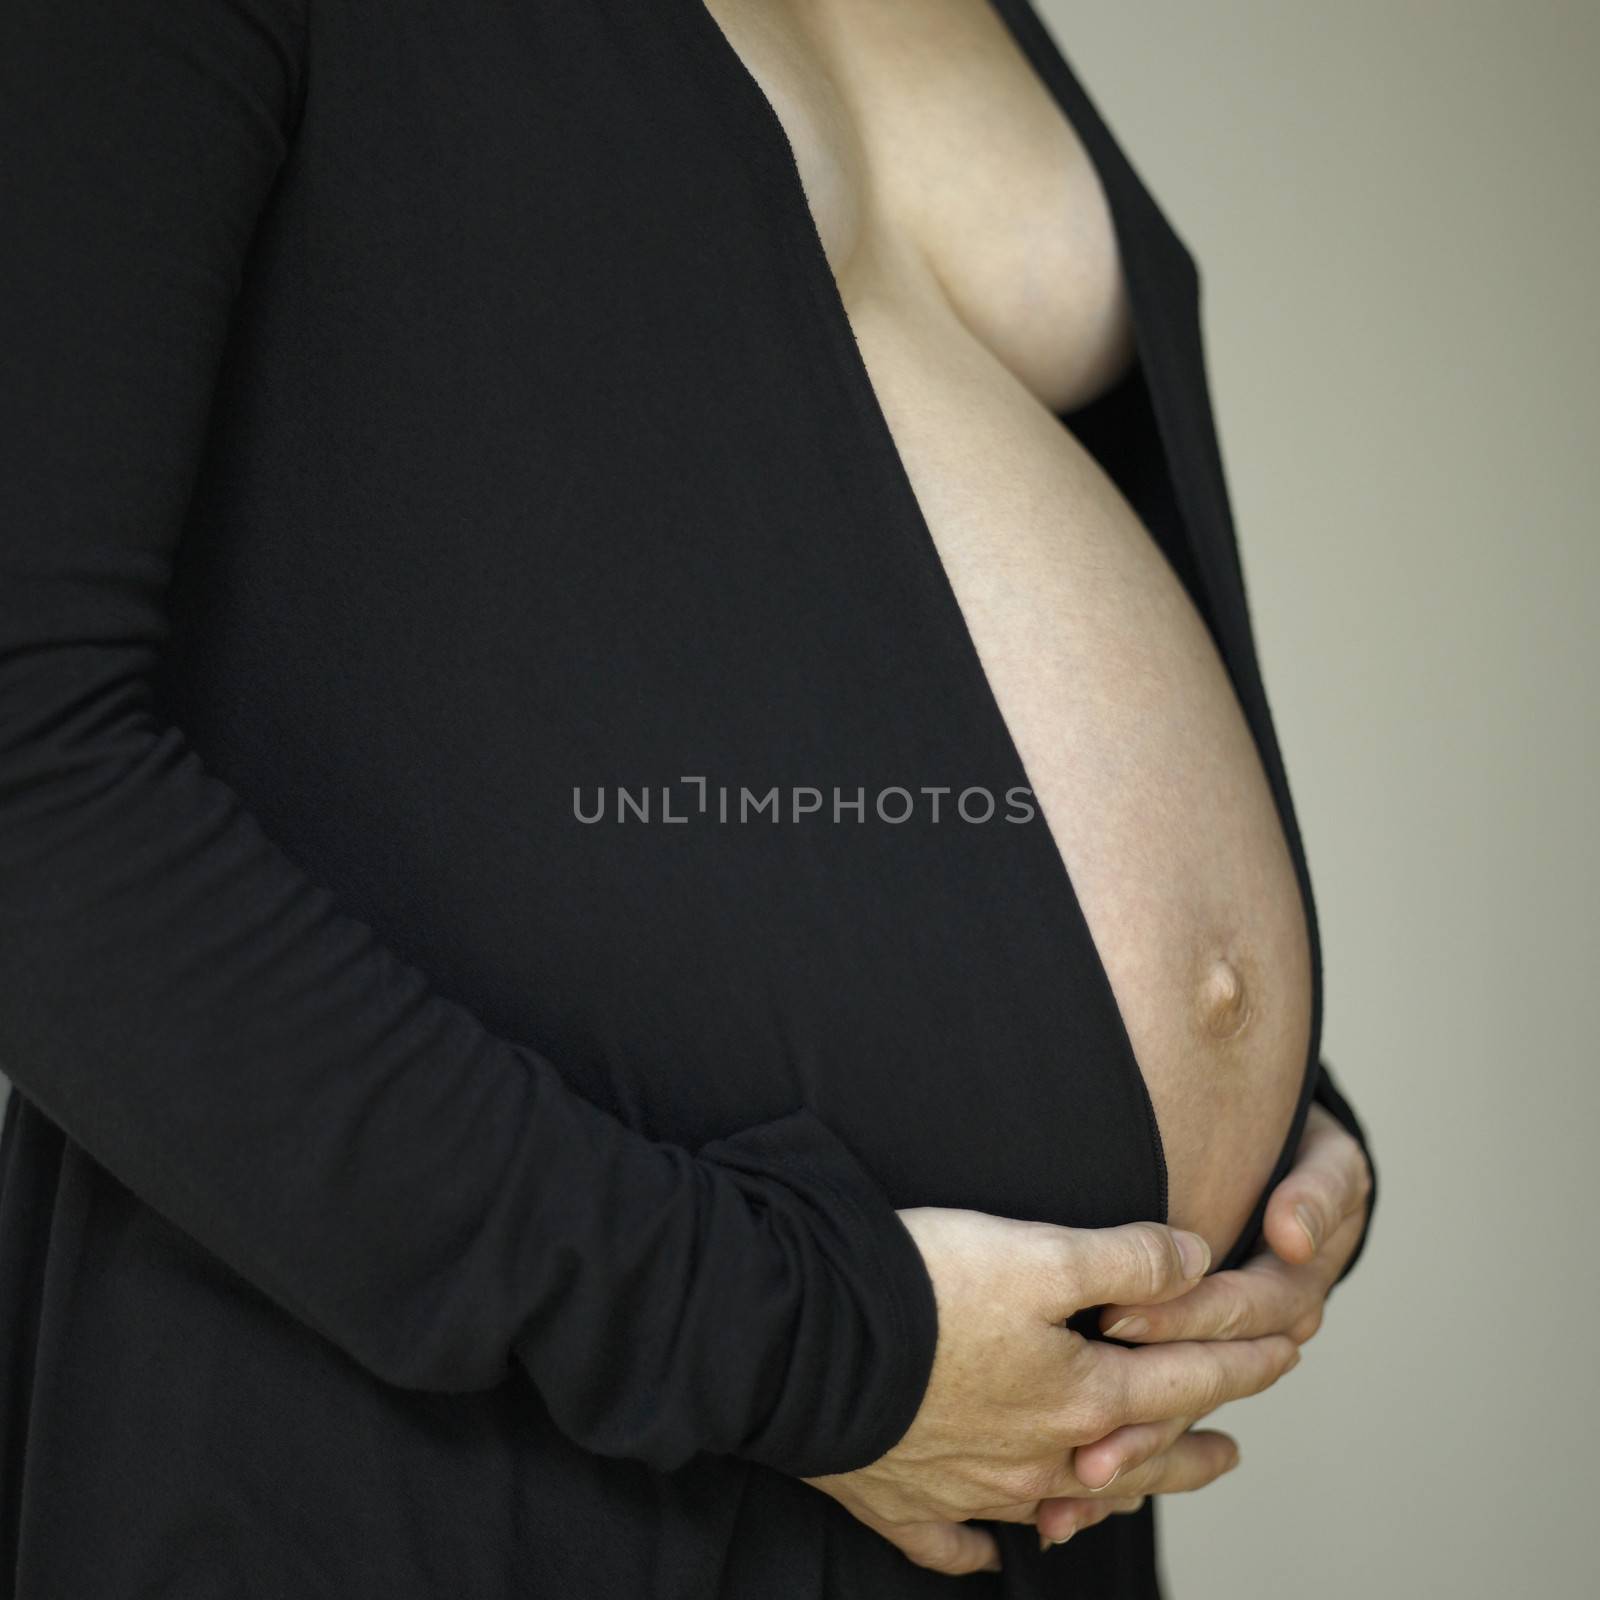 Belly of a pregant woman wearing black